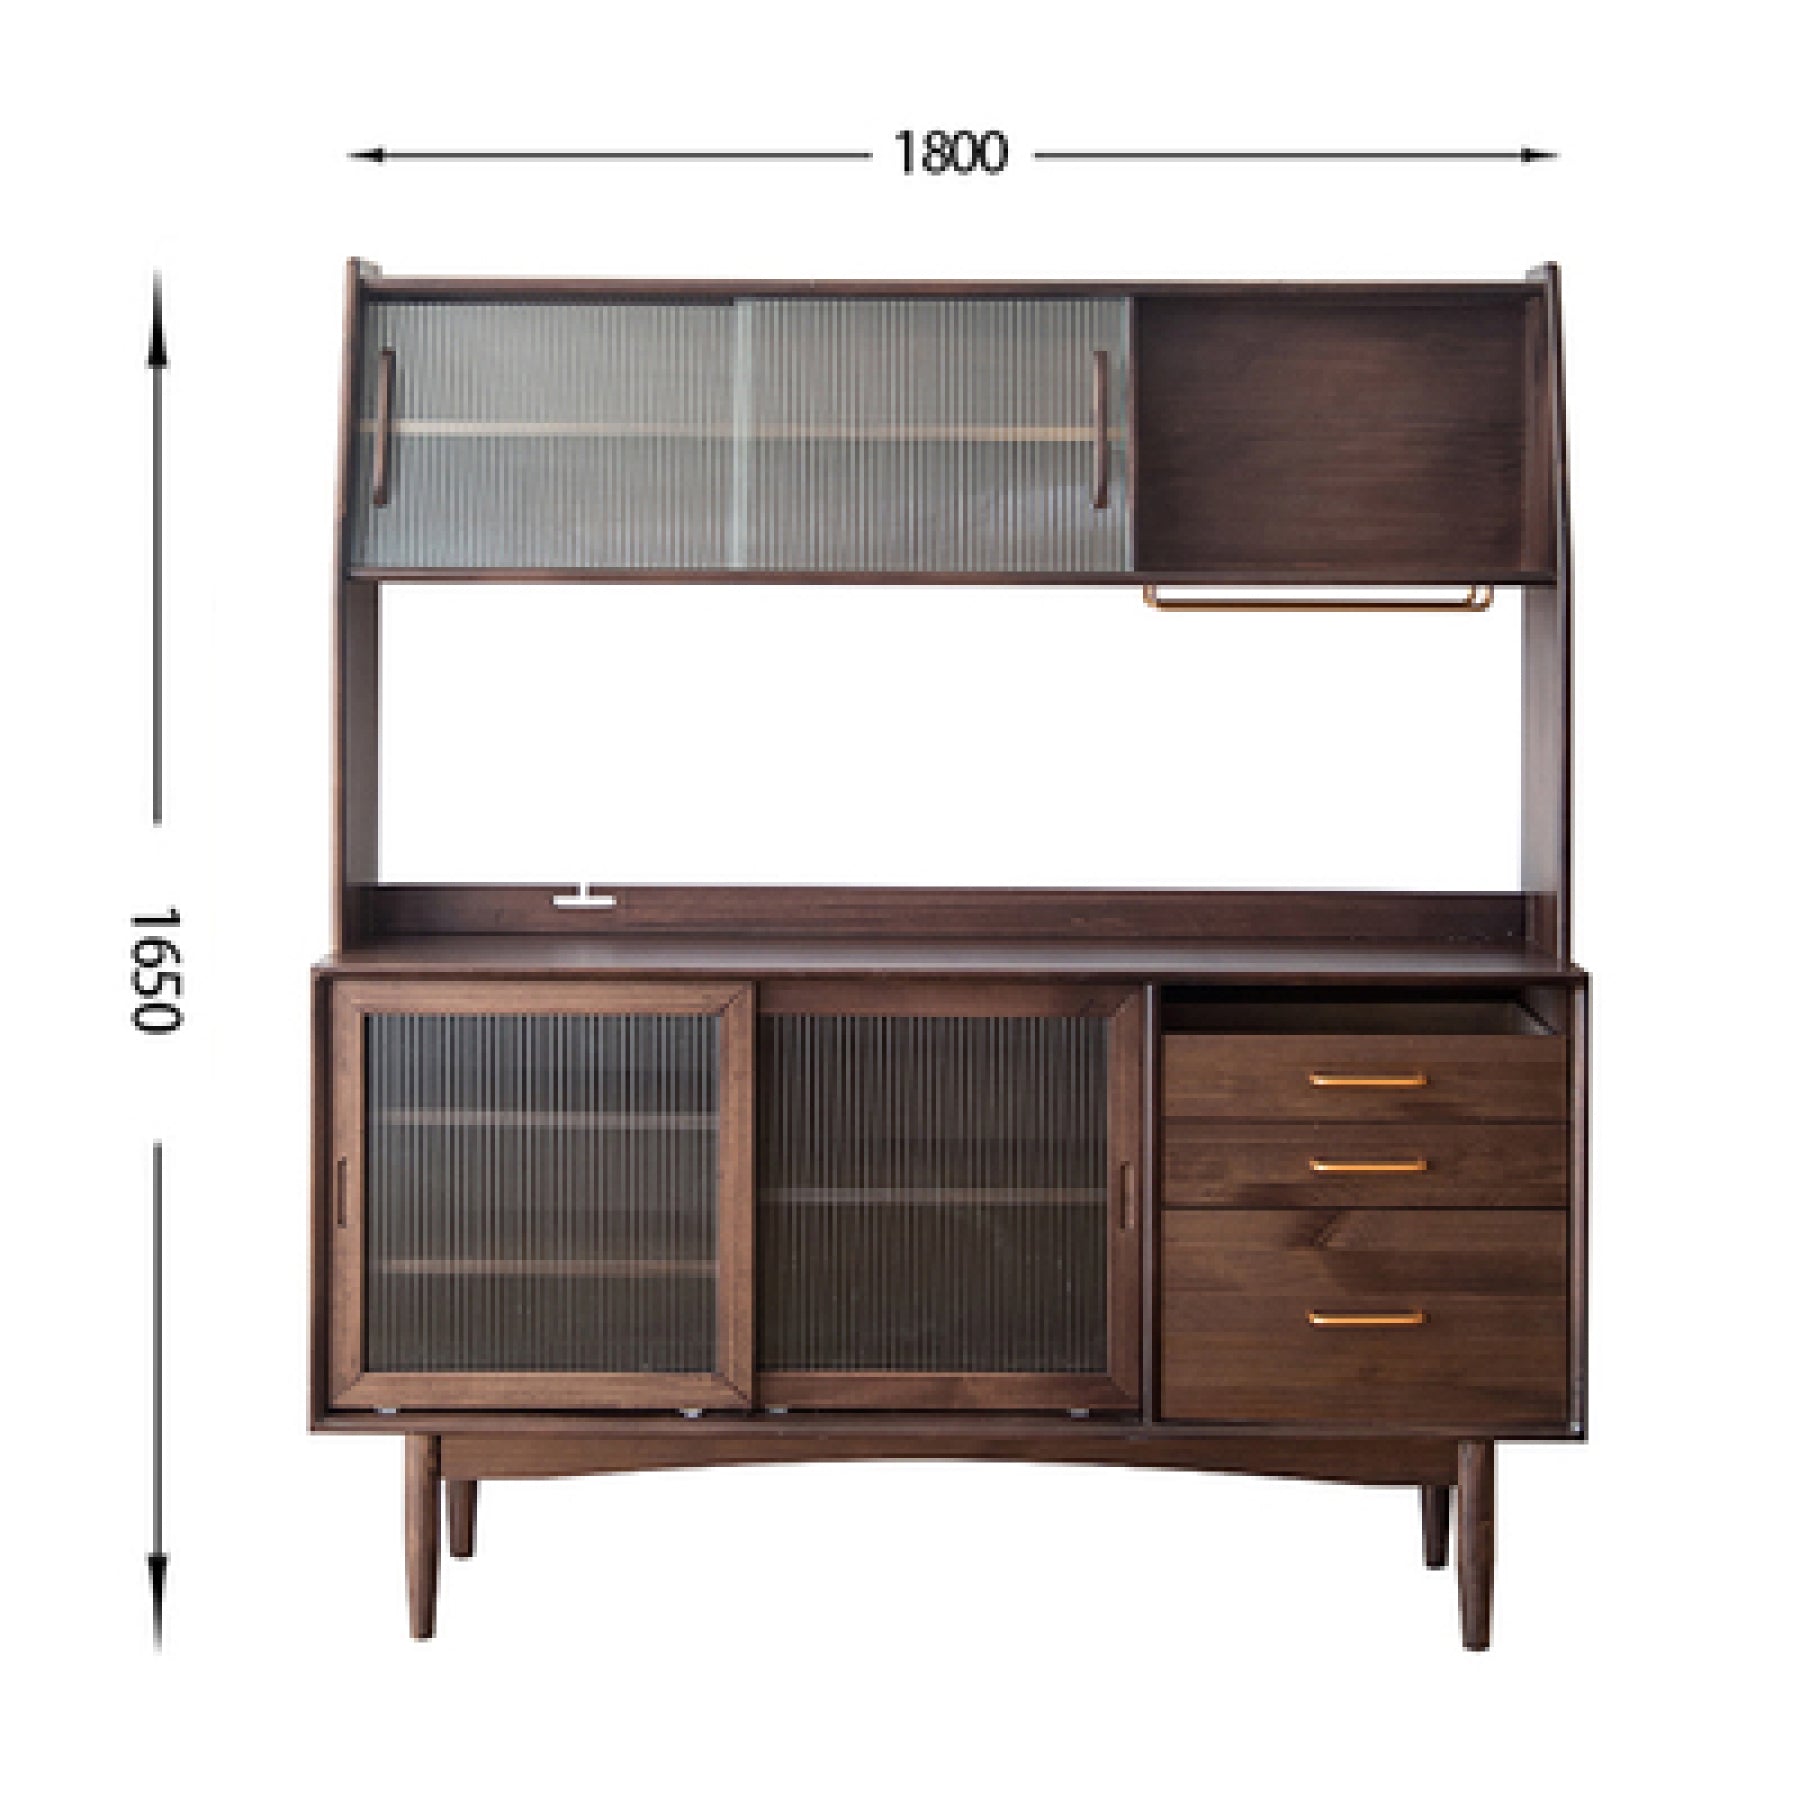 Tom Pine Wood Kitchen Storage Cabinet V